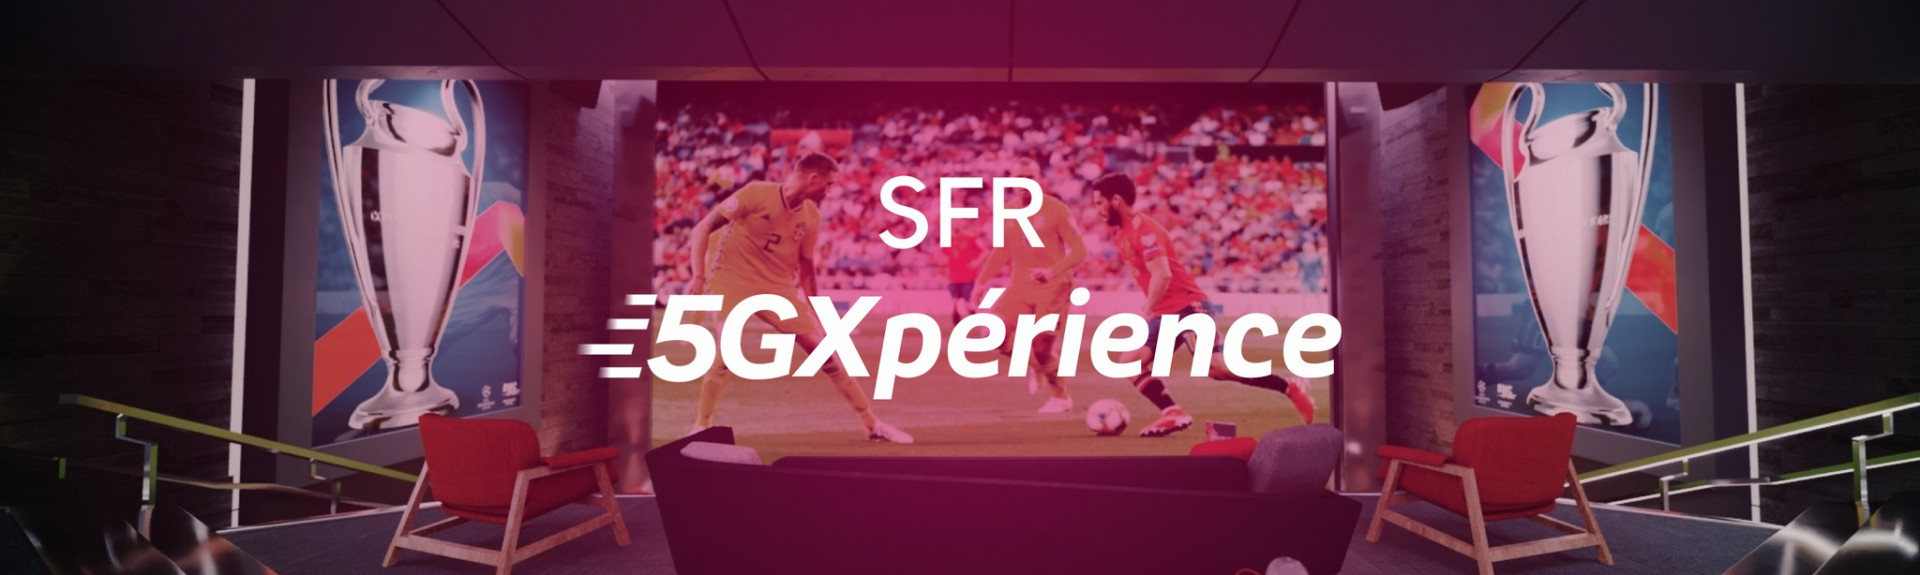 SFR 5G Xperience